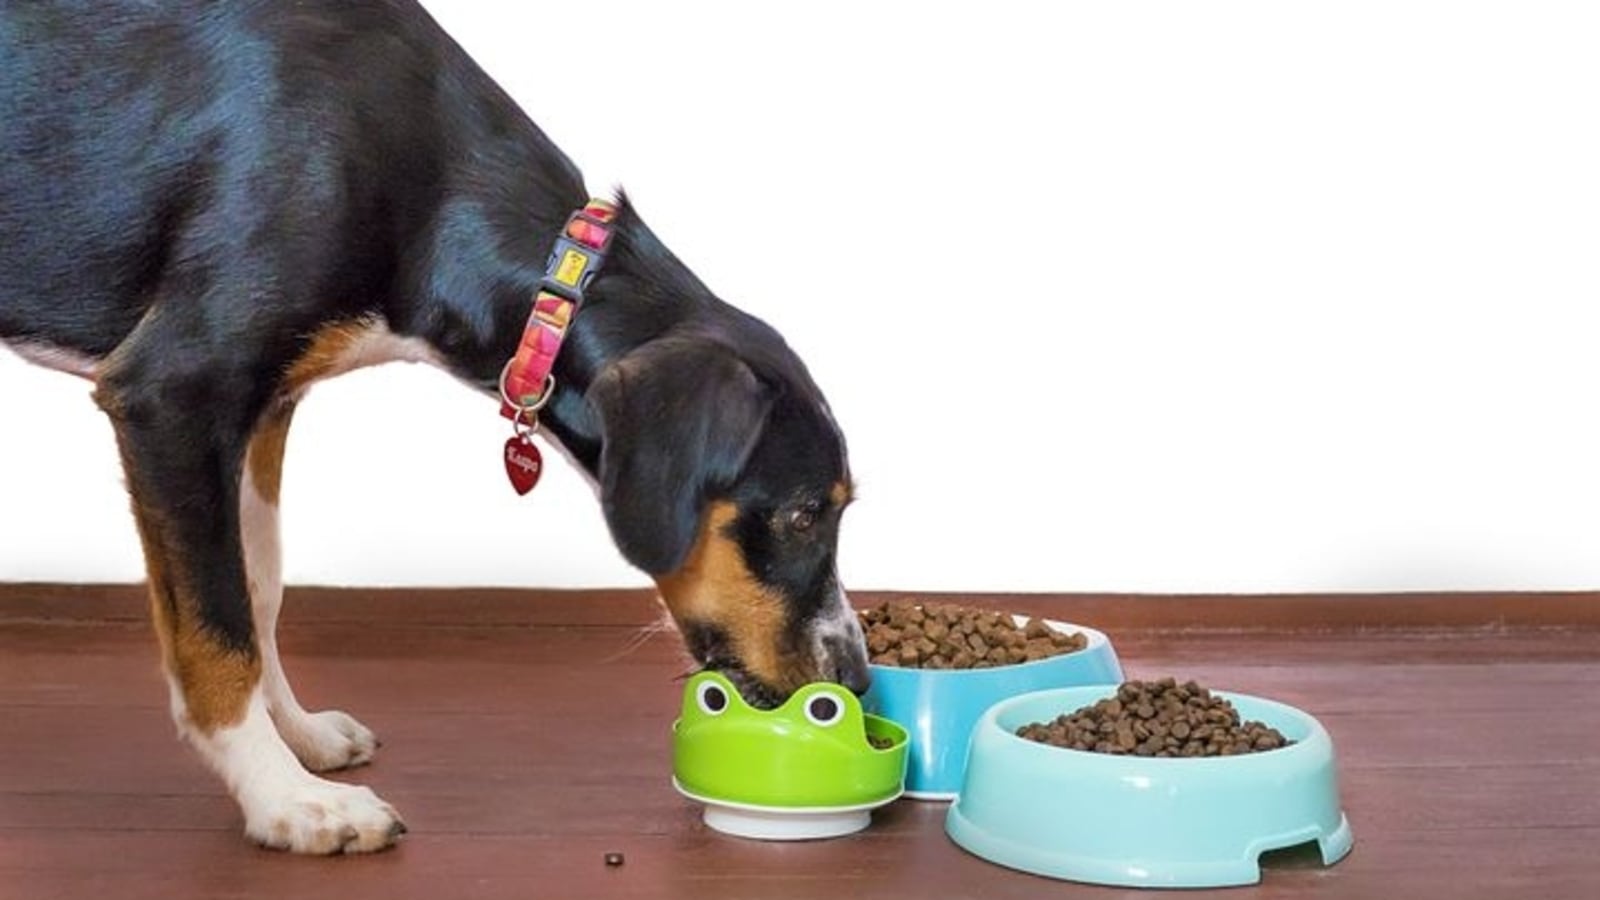 is pedigree dog food good for labs